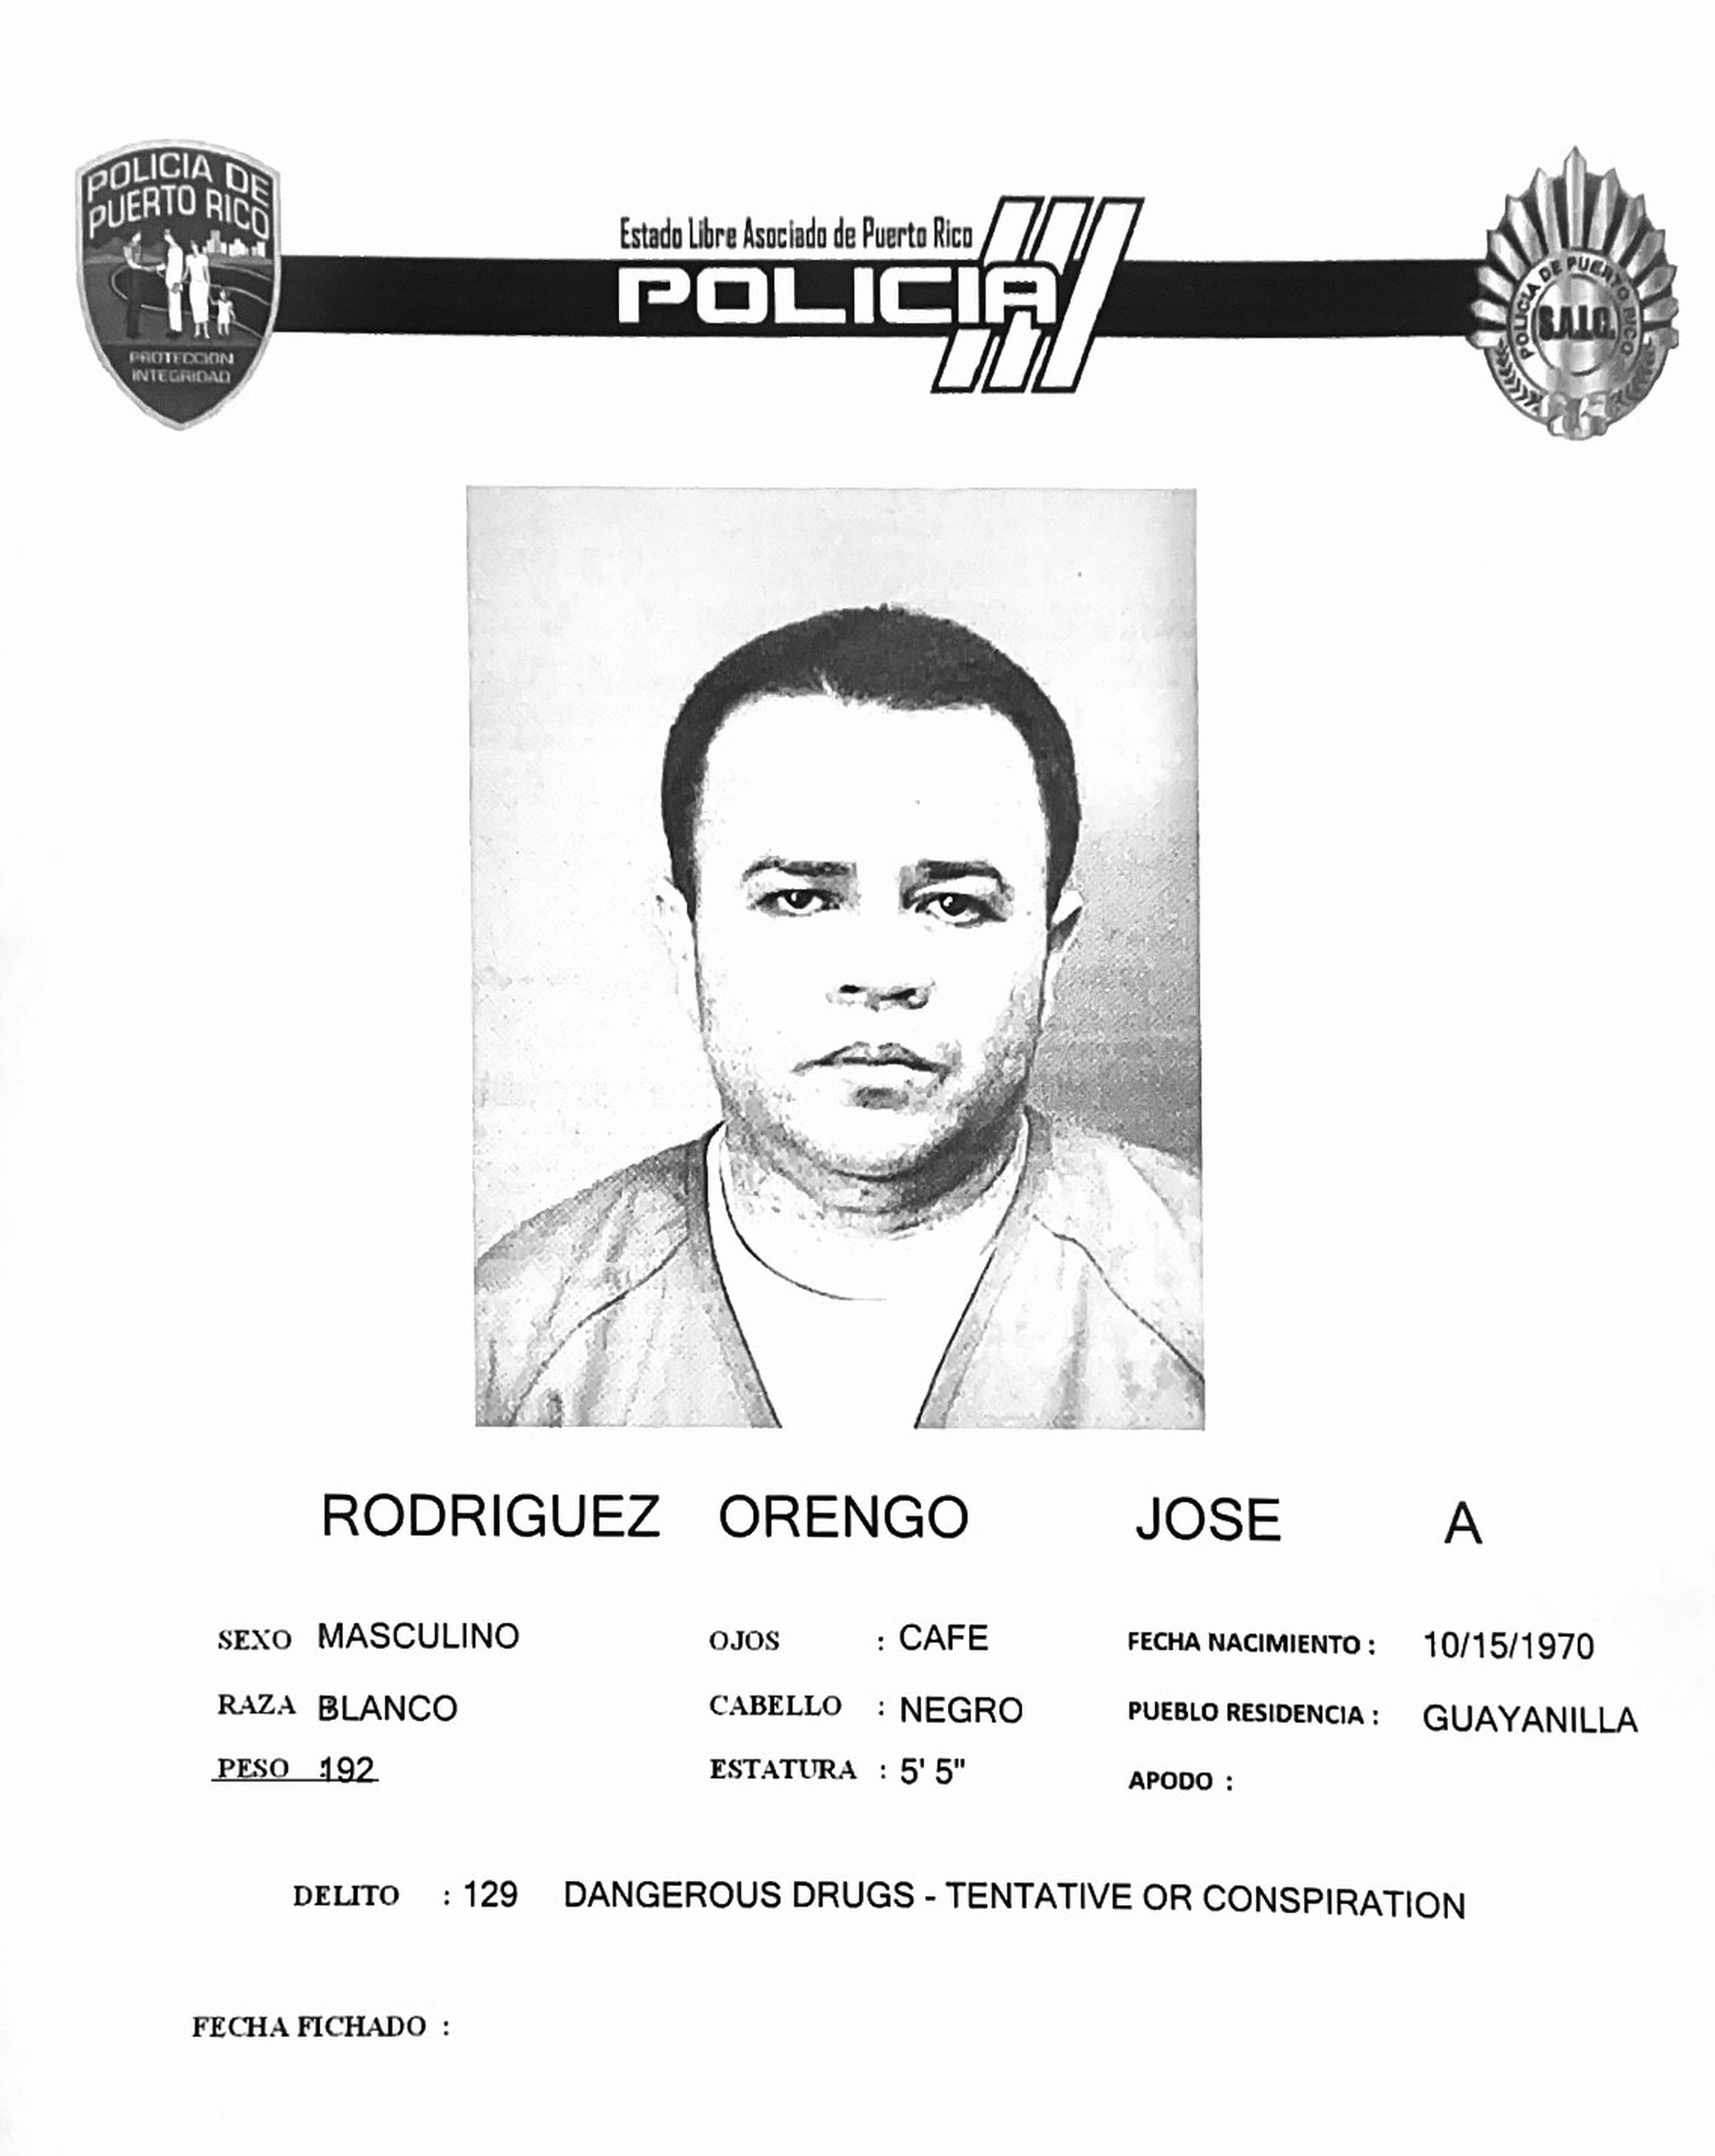 José A. Rodríguez Orengo